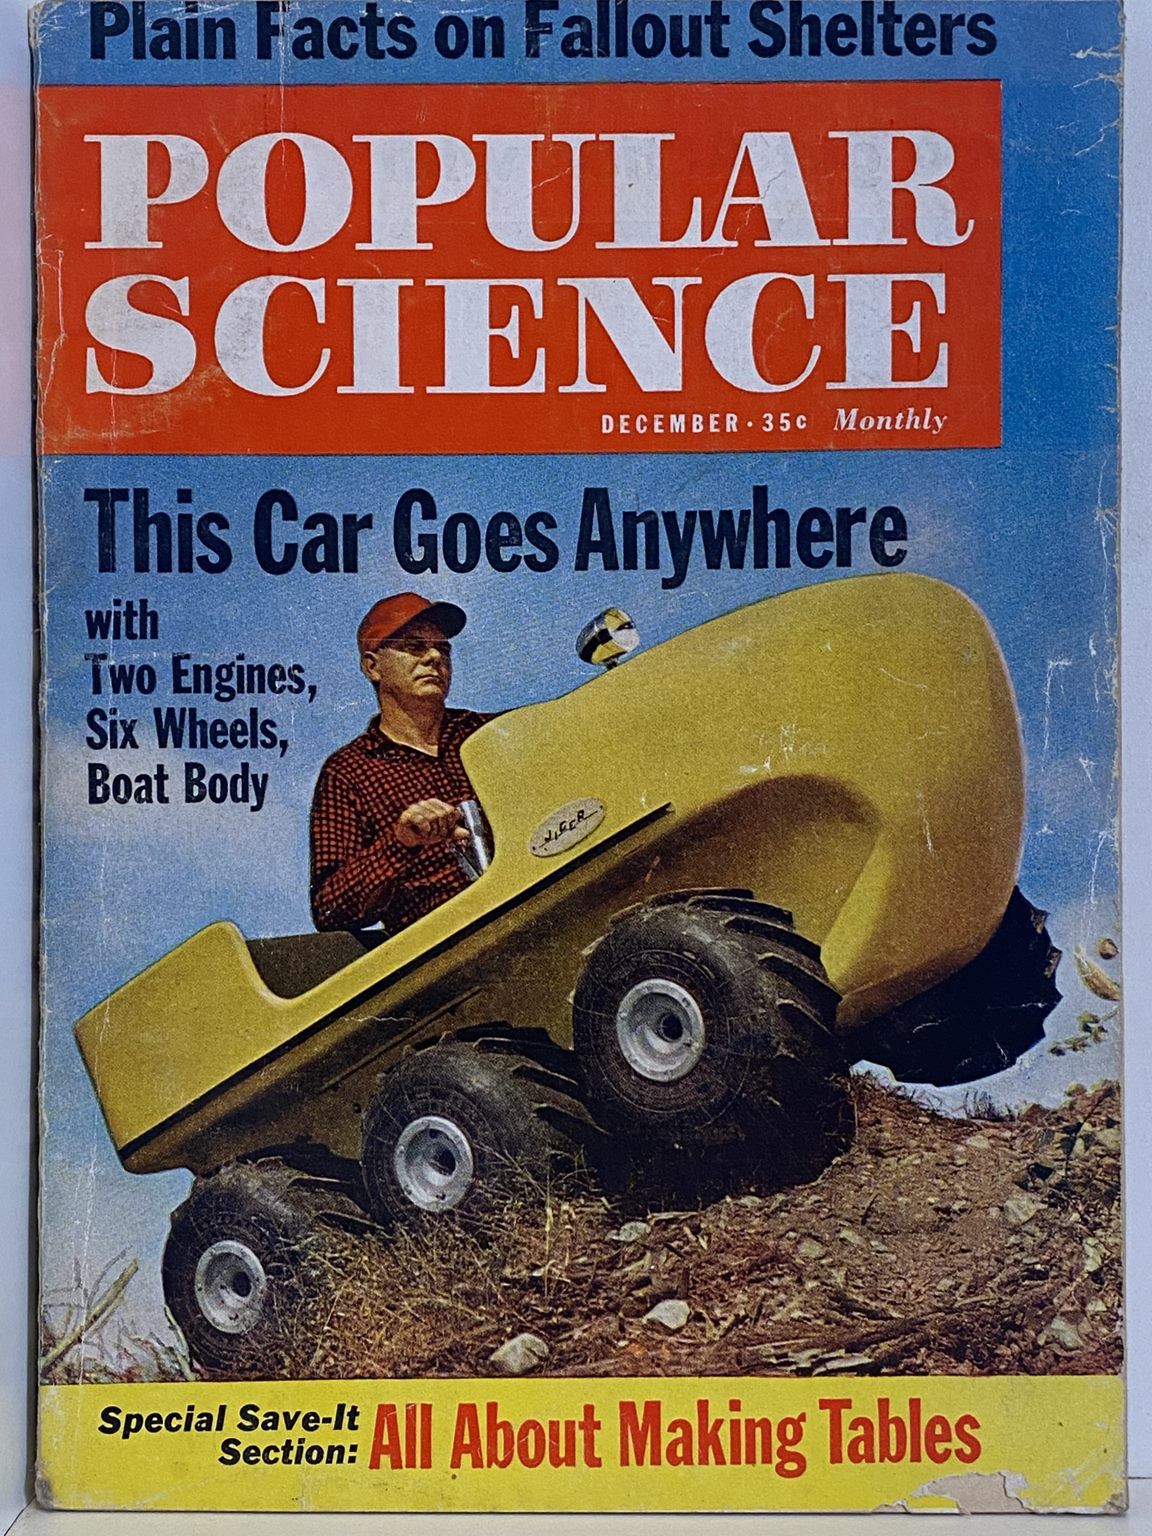 VINTAGE MAGAZINE: Popular Science, Vol. 179, No. 6 - December 1961